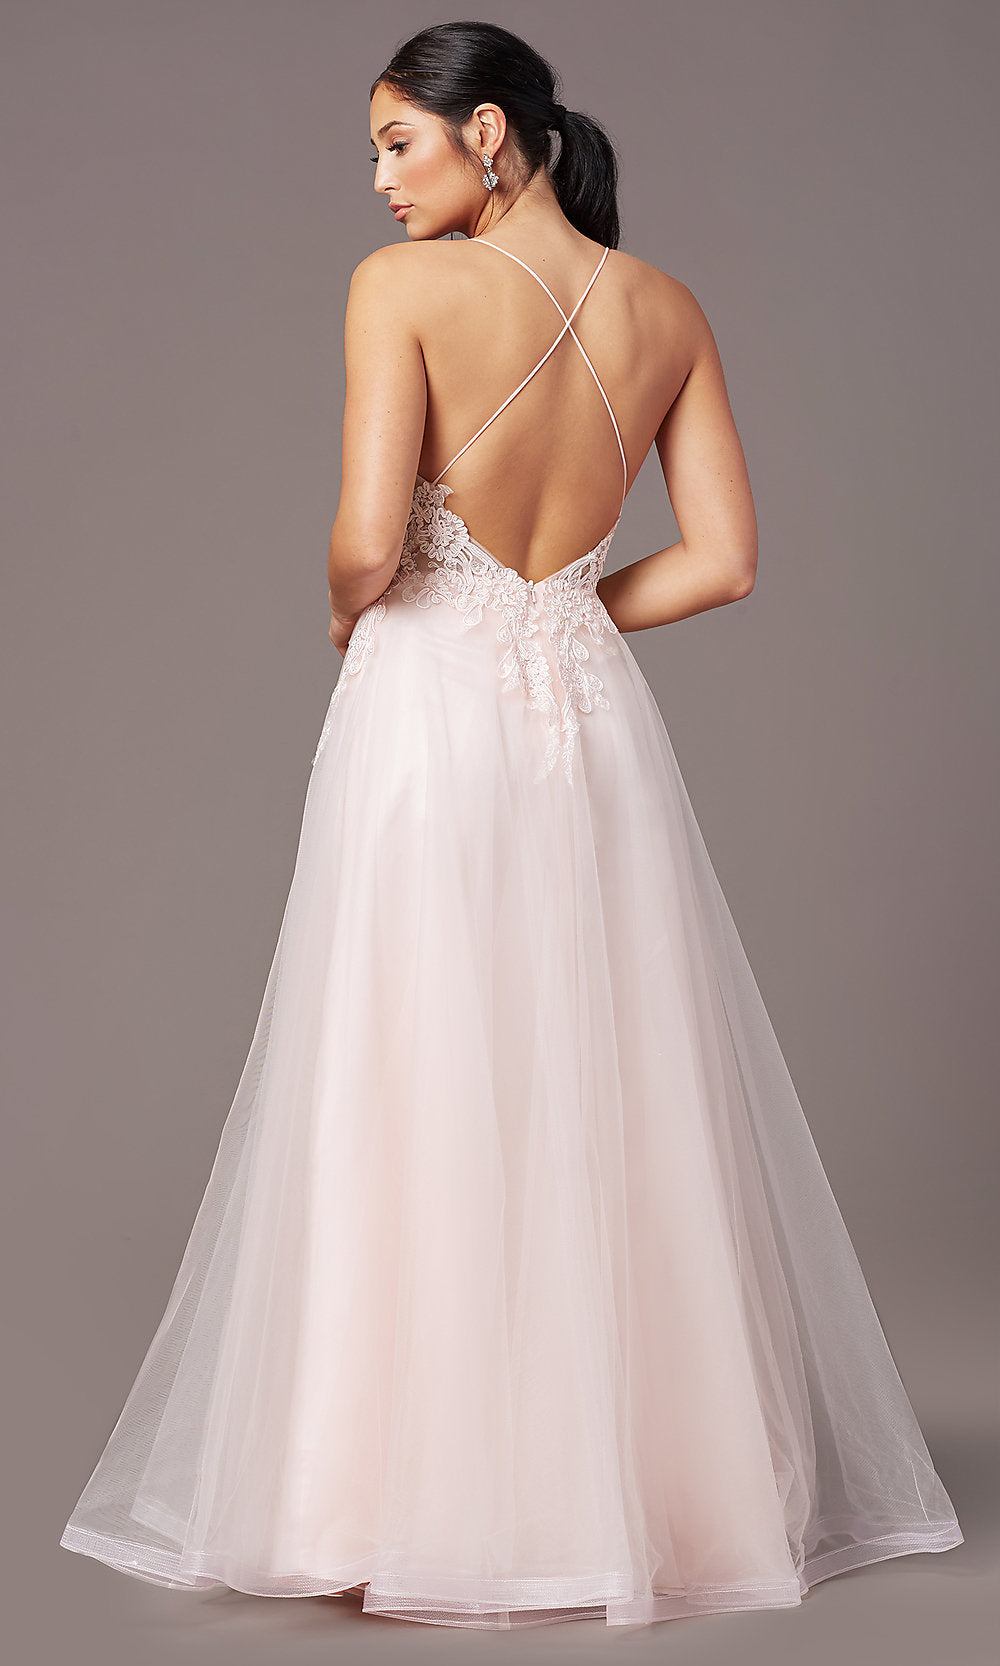  V-Neck Long Tulle Formal Prom Dress by PromGirl